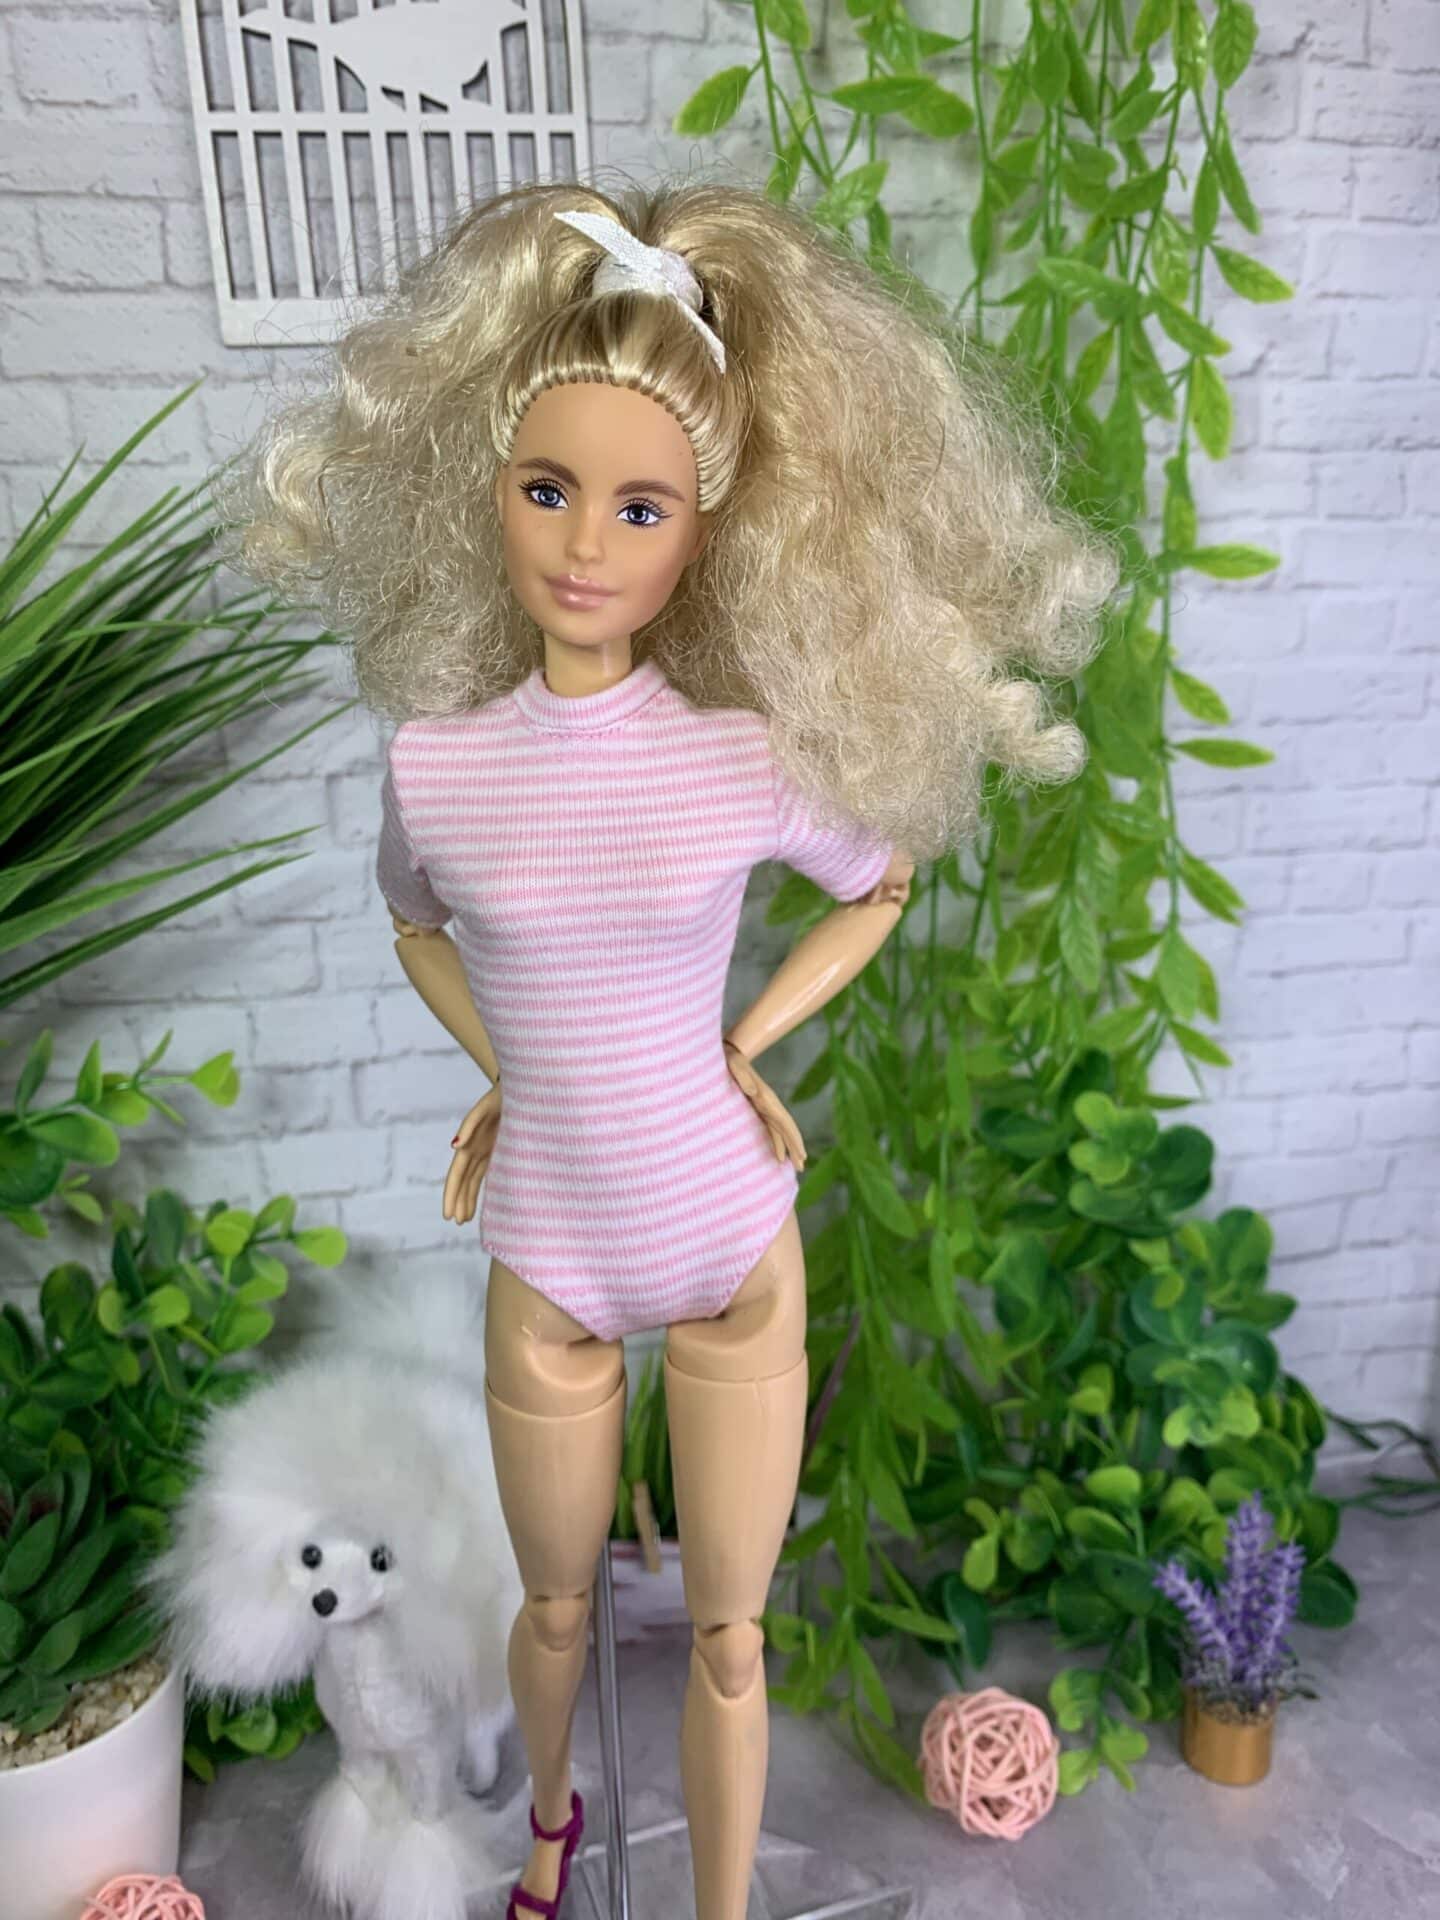 Articulated Barbie Dark Skin, Afro Puffs and Braids see